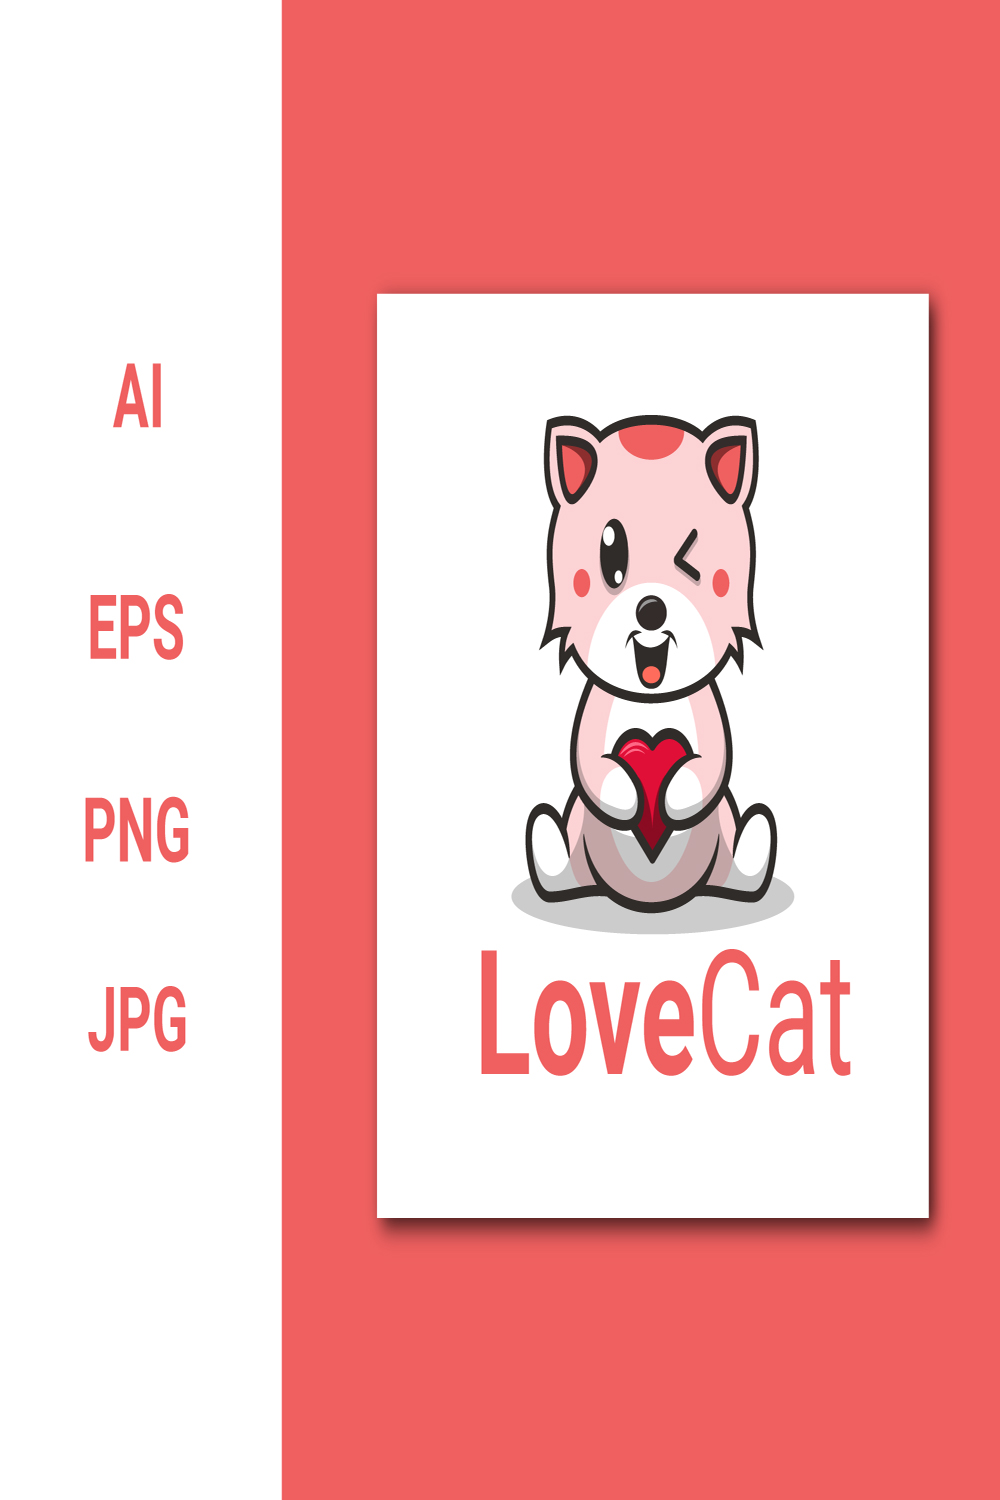 love cat logo pinterest preview image.